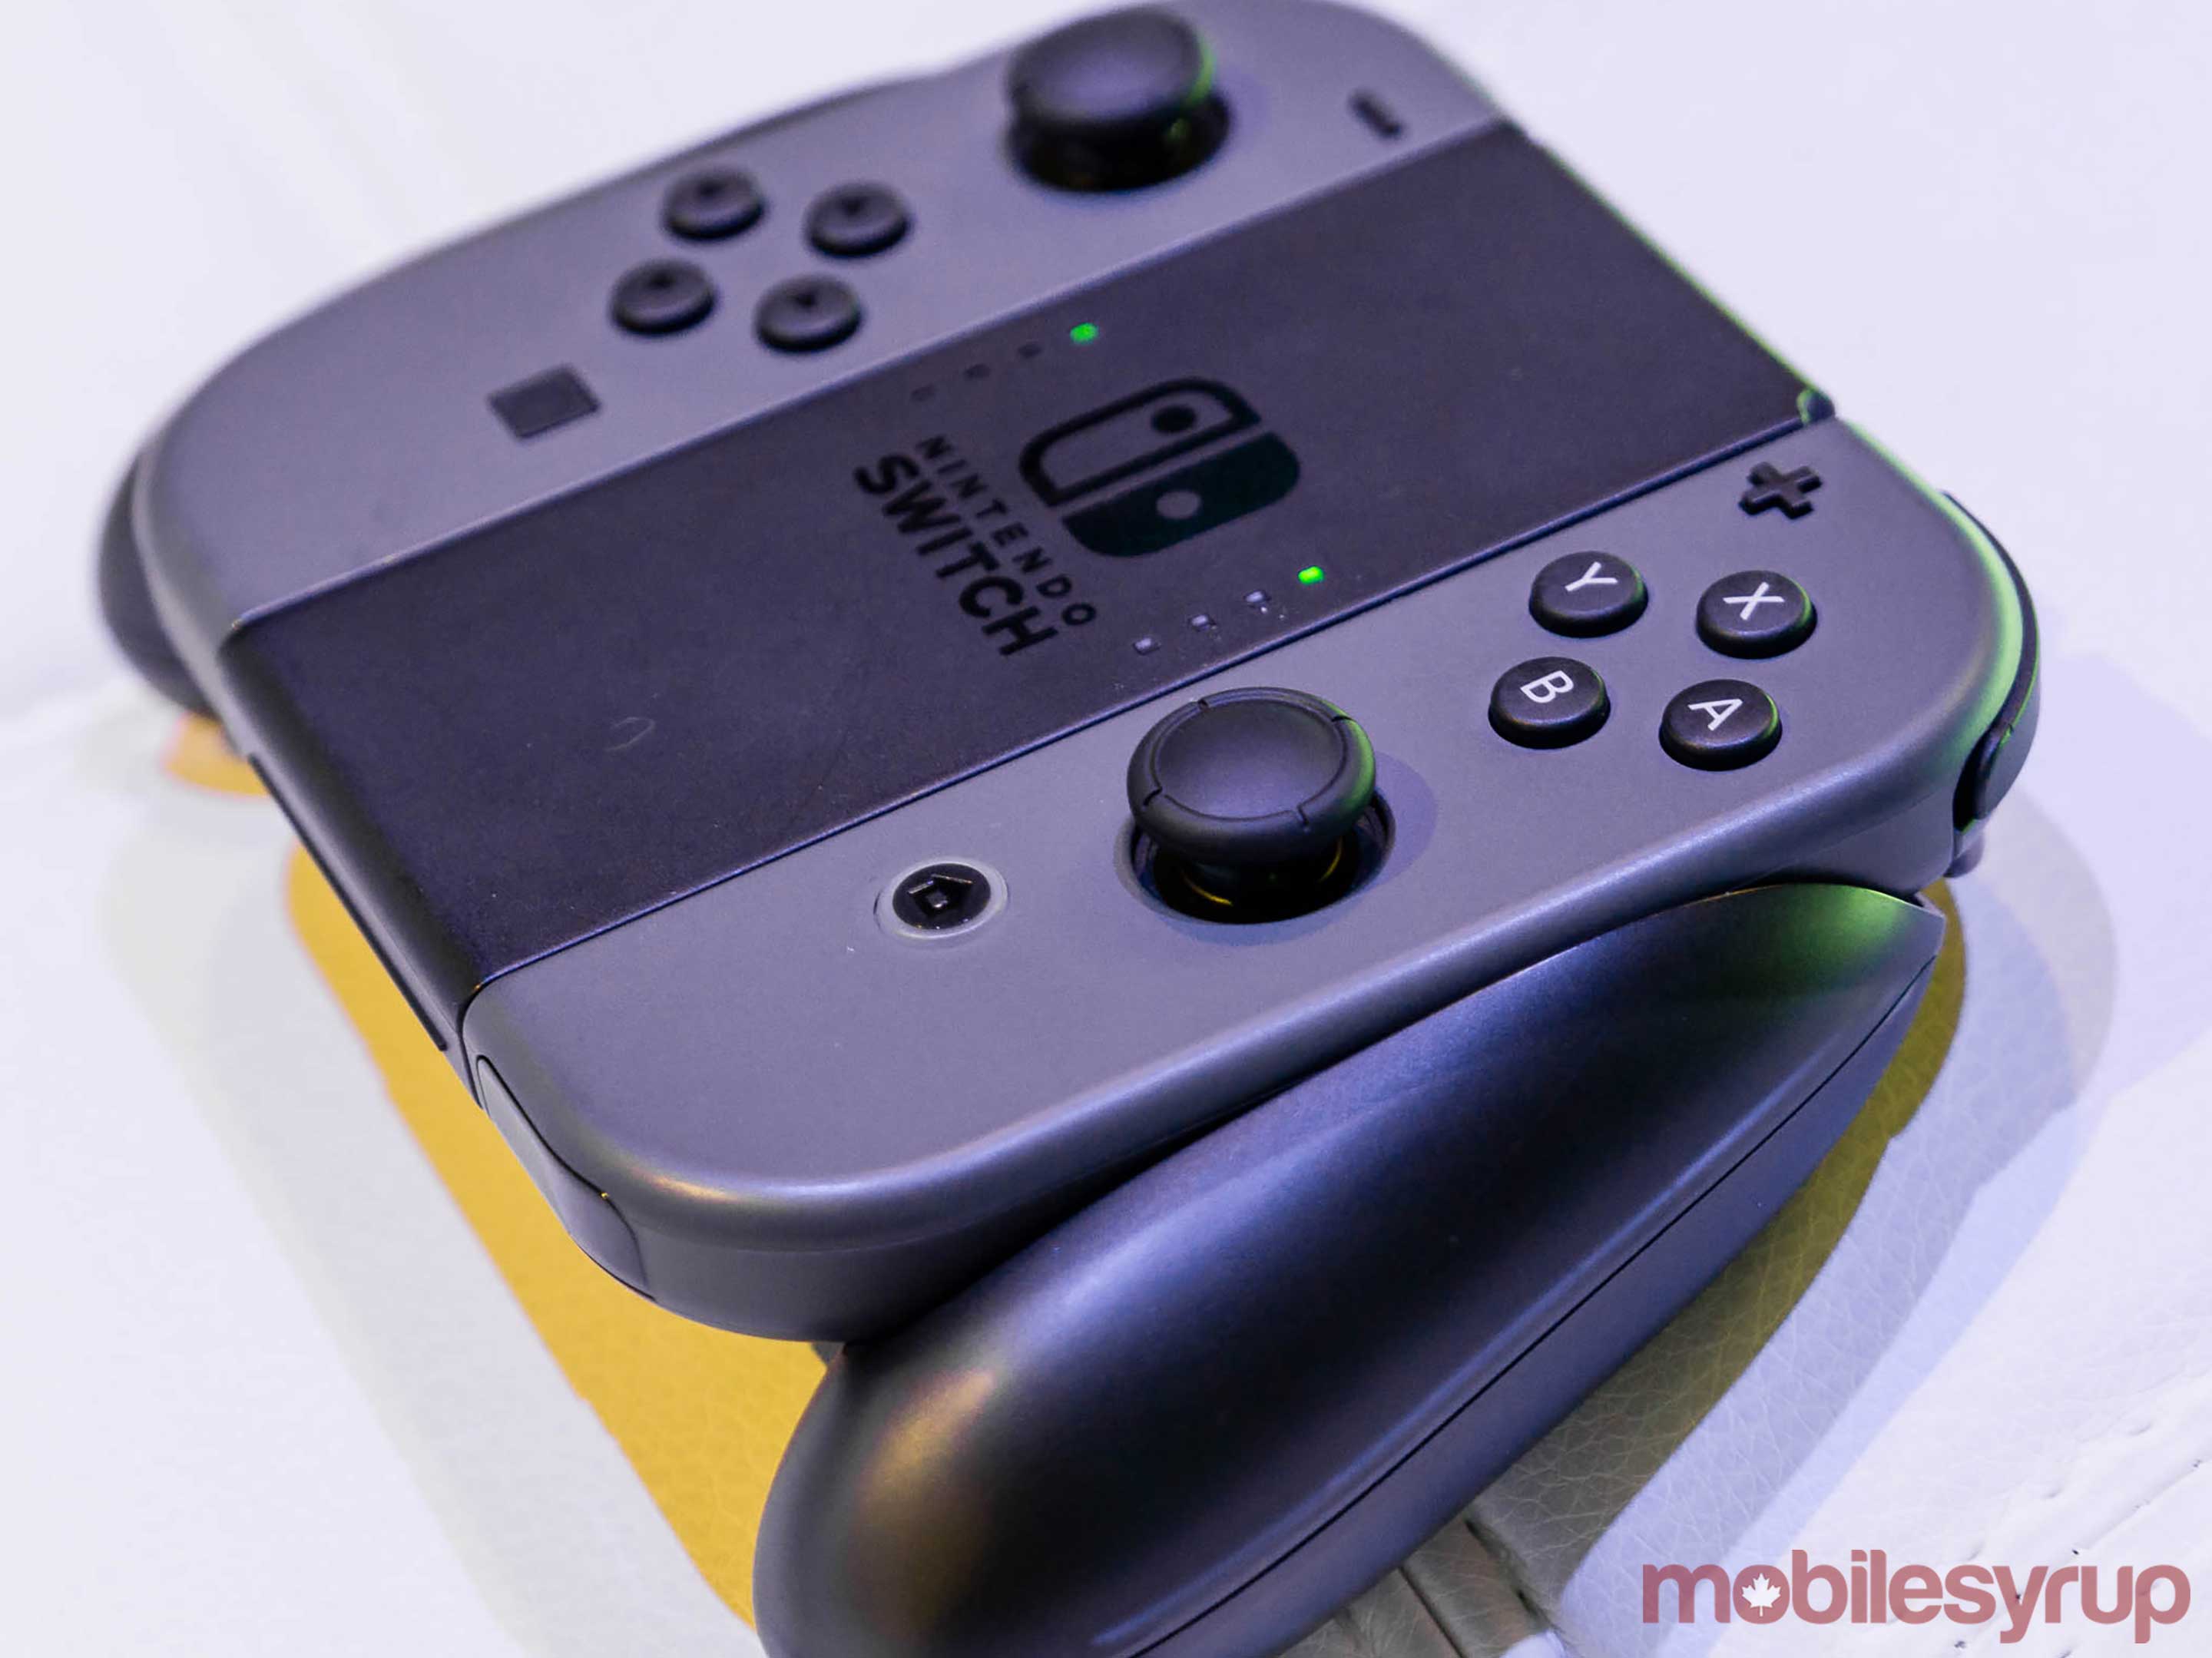 Joy-Con Nintendo Switch controllers